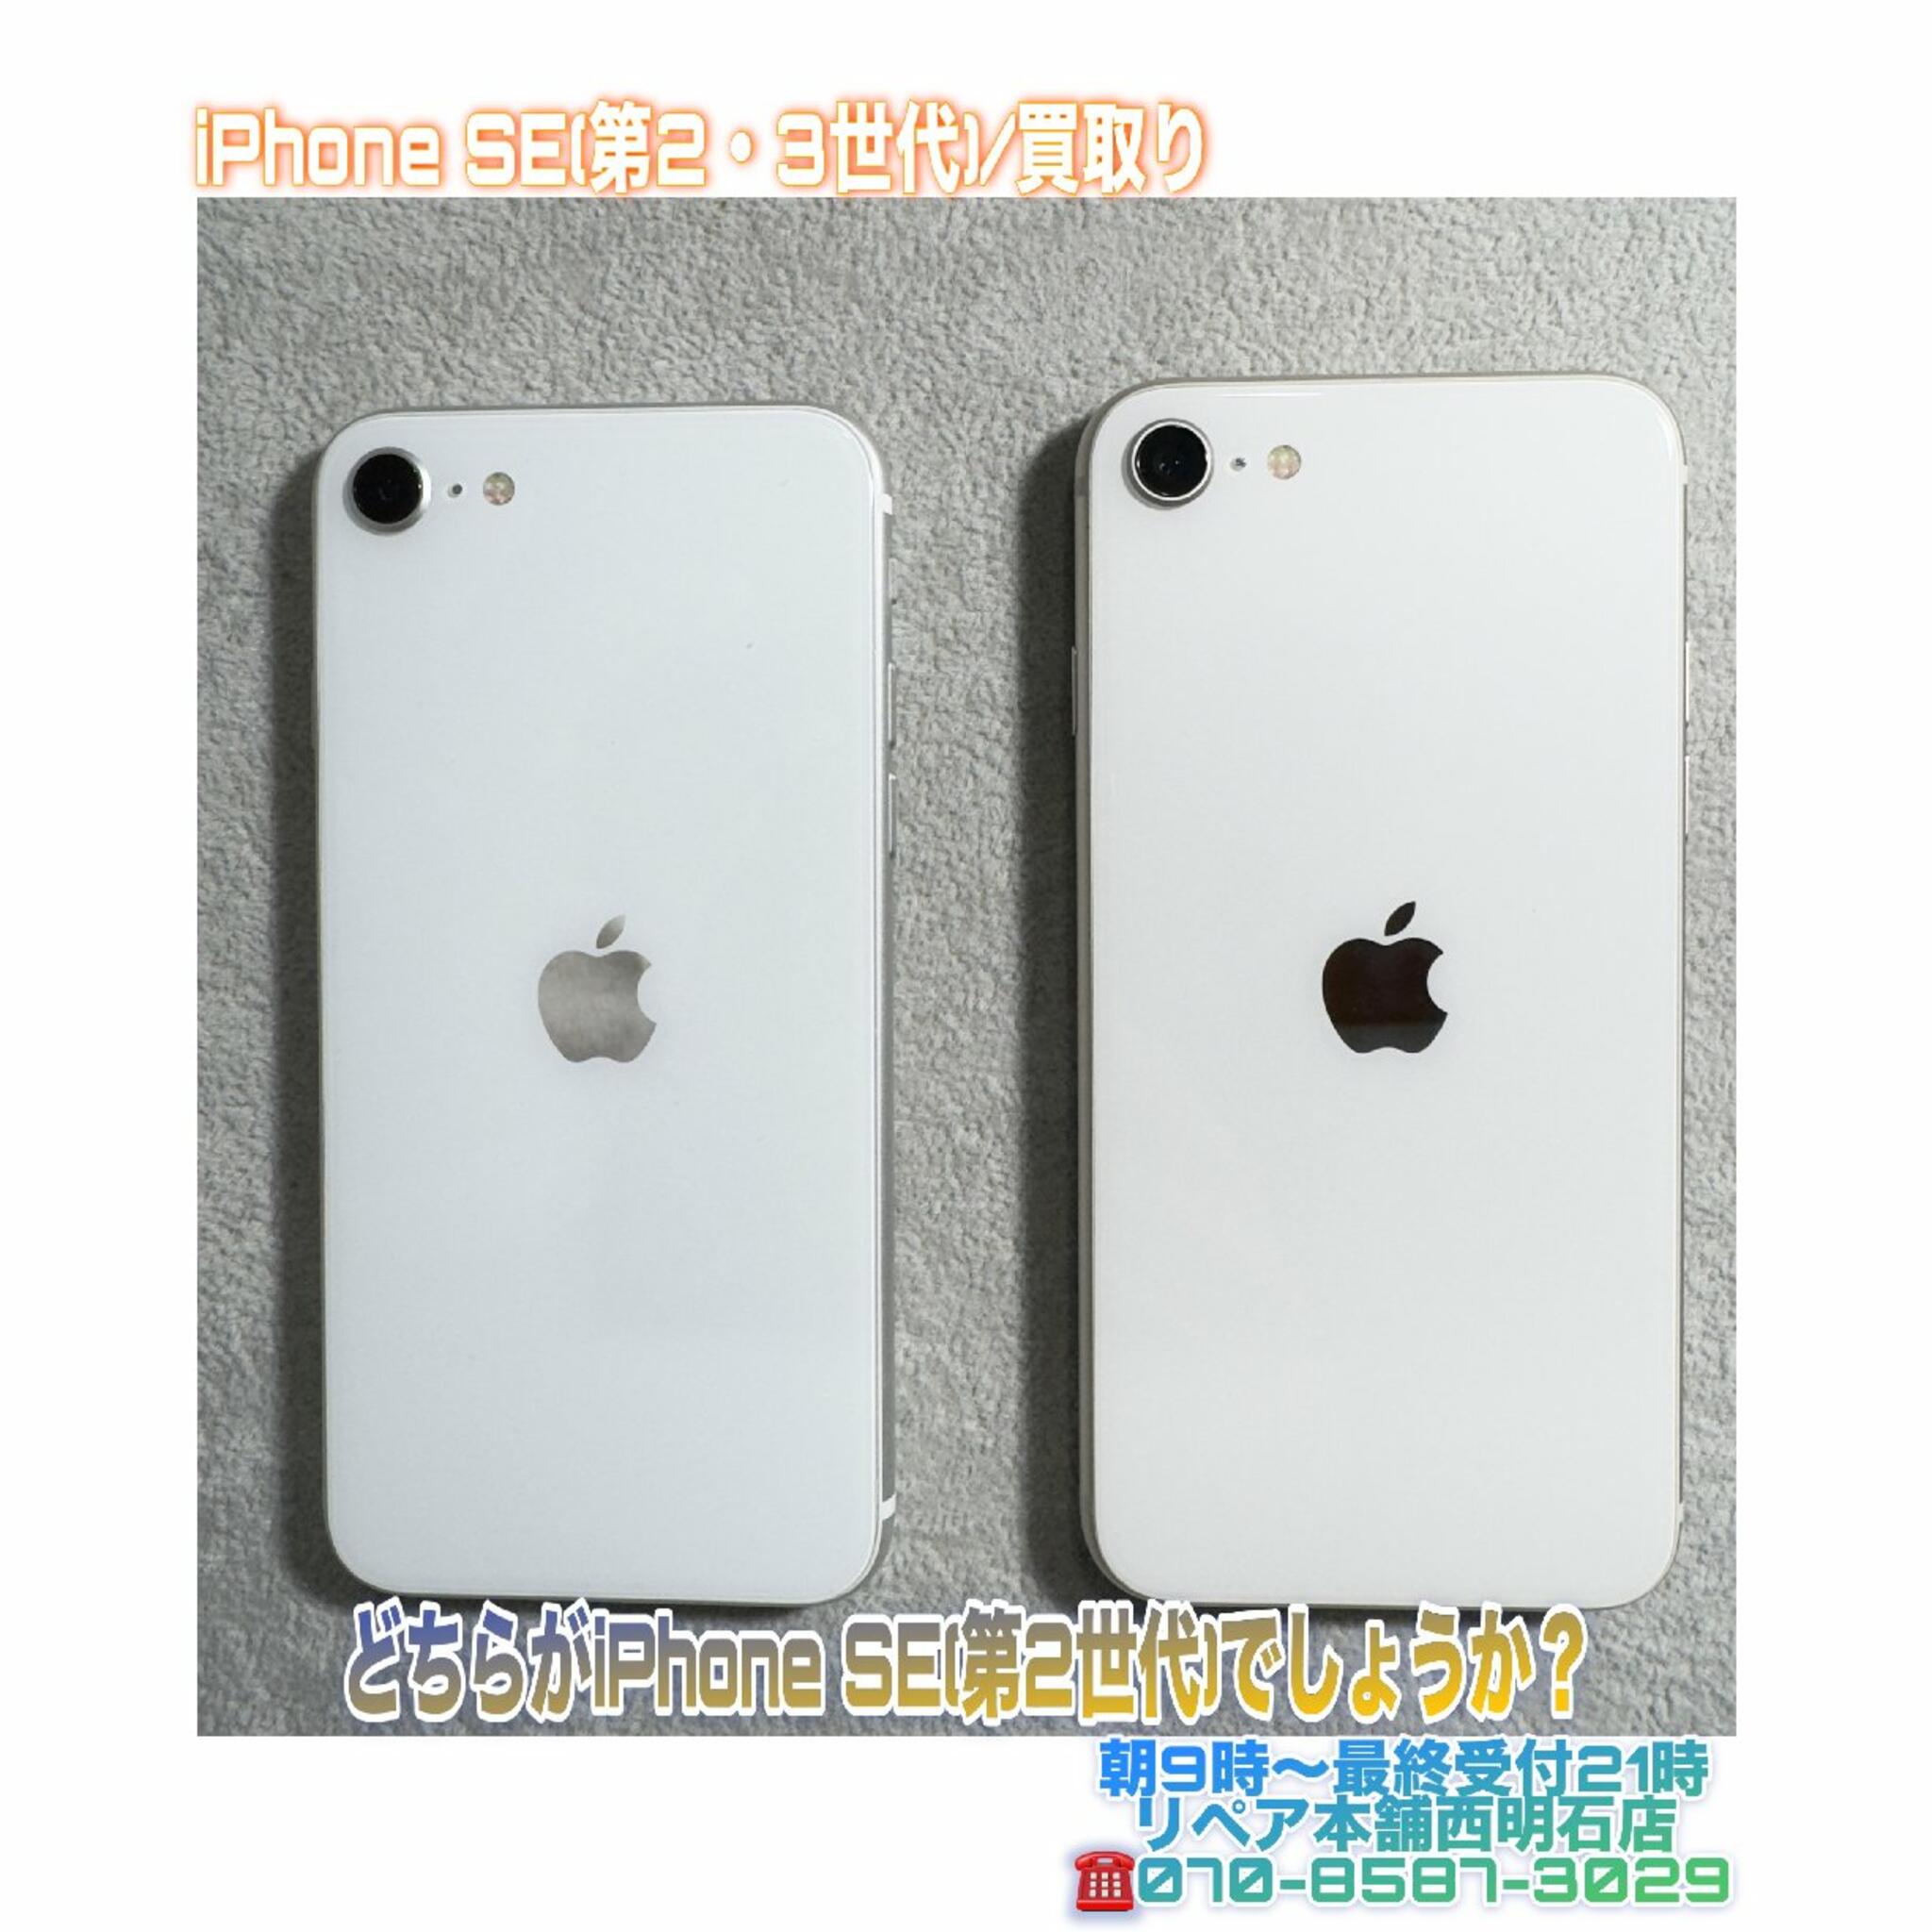 iPhone修理 明石 リペア本舗 西明石店からのお知らせ(💡神戸市西区の方より、iPhone SE(第2・3世代)買取りのご依頼を頂きました🙂)に関する写真